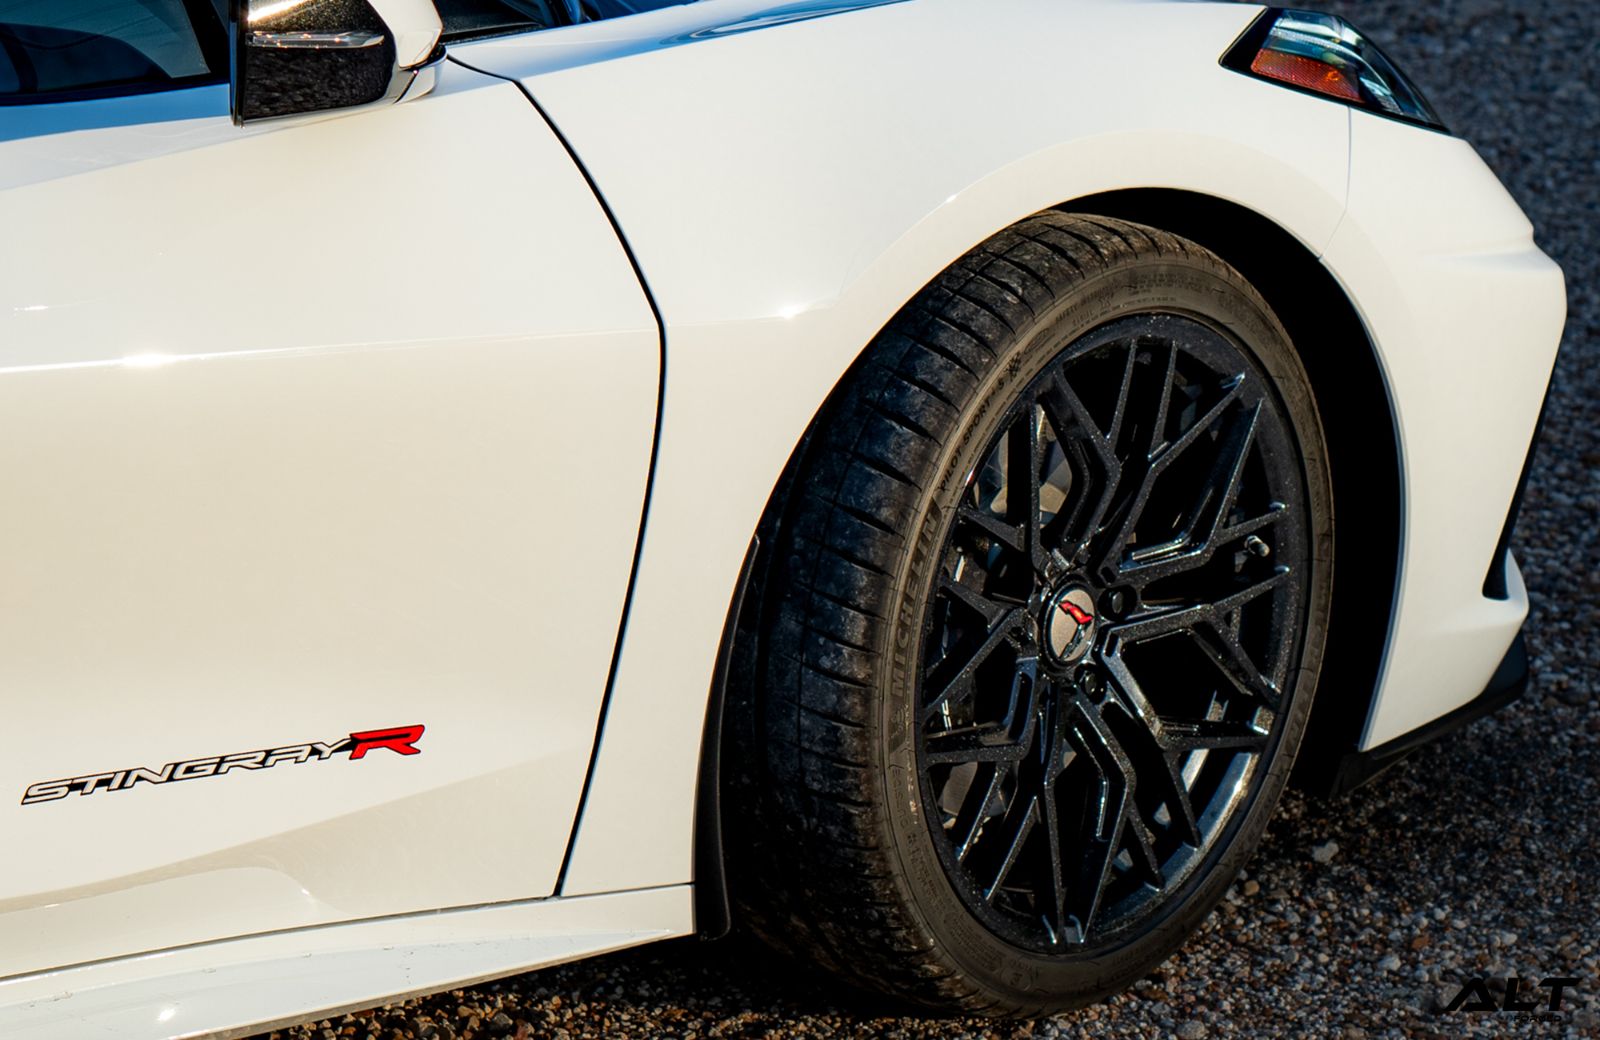 C8 Corvette Wheels: ALT Forged Velocity - Satin Bronze (Set)